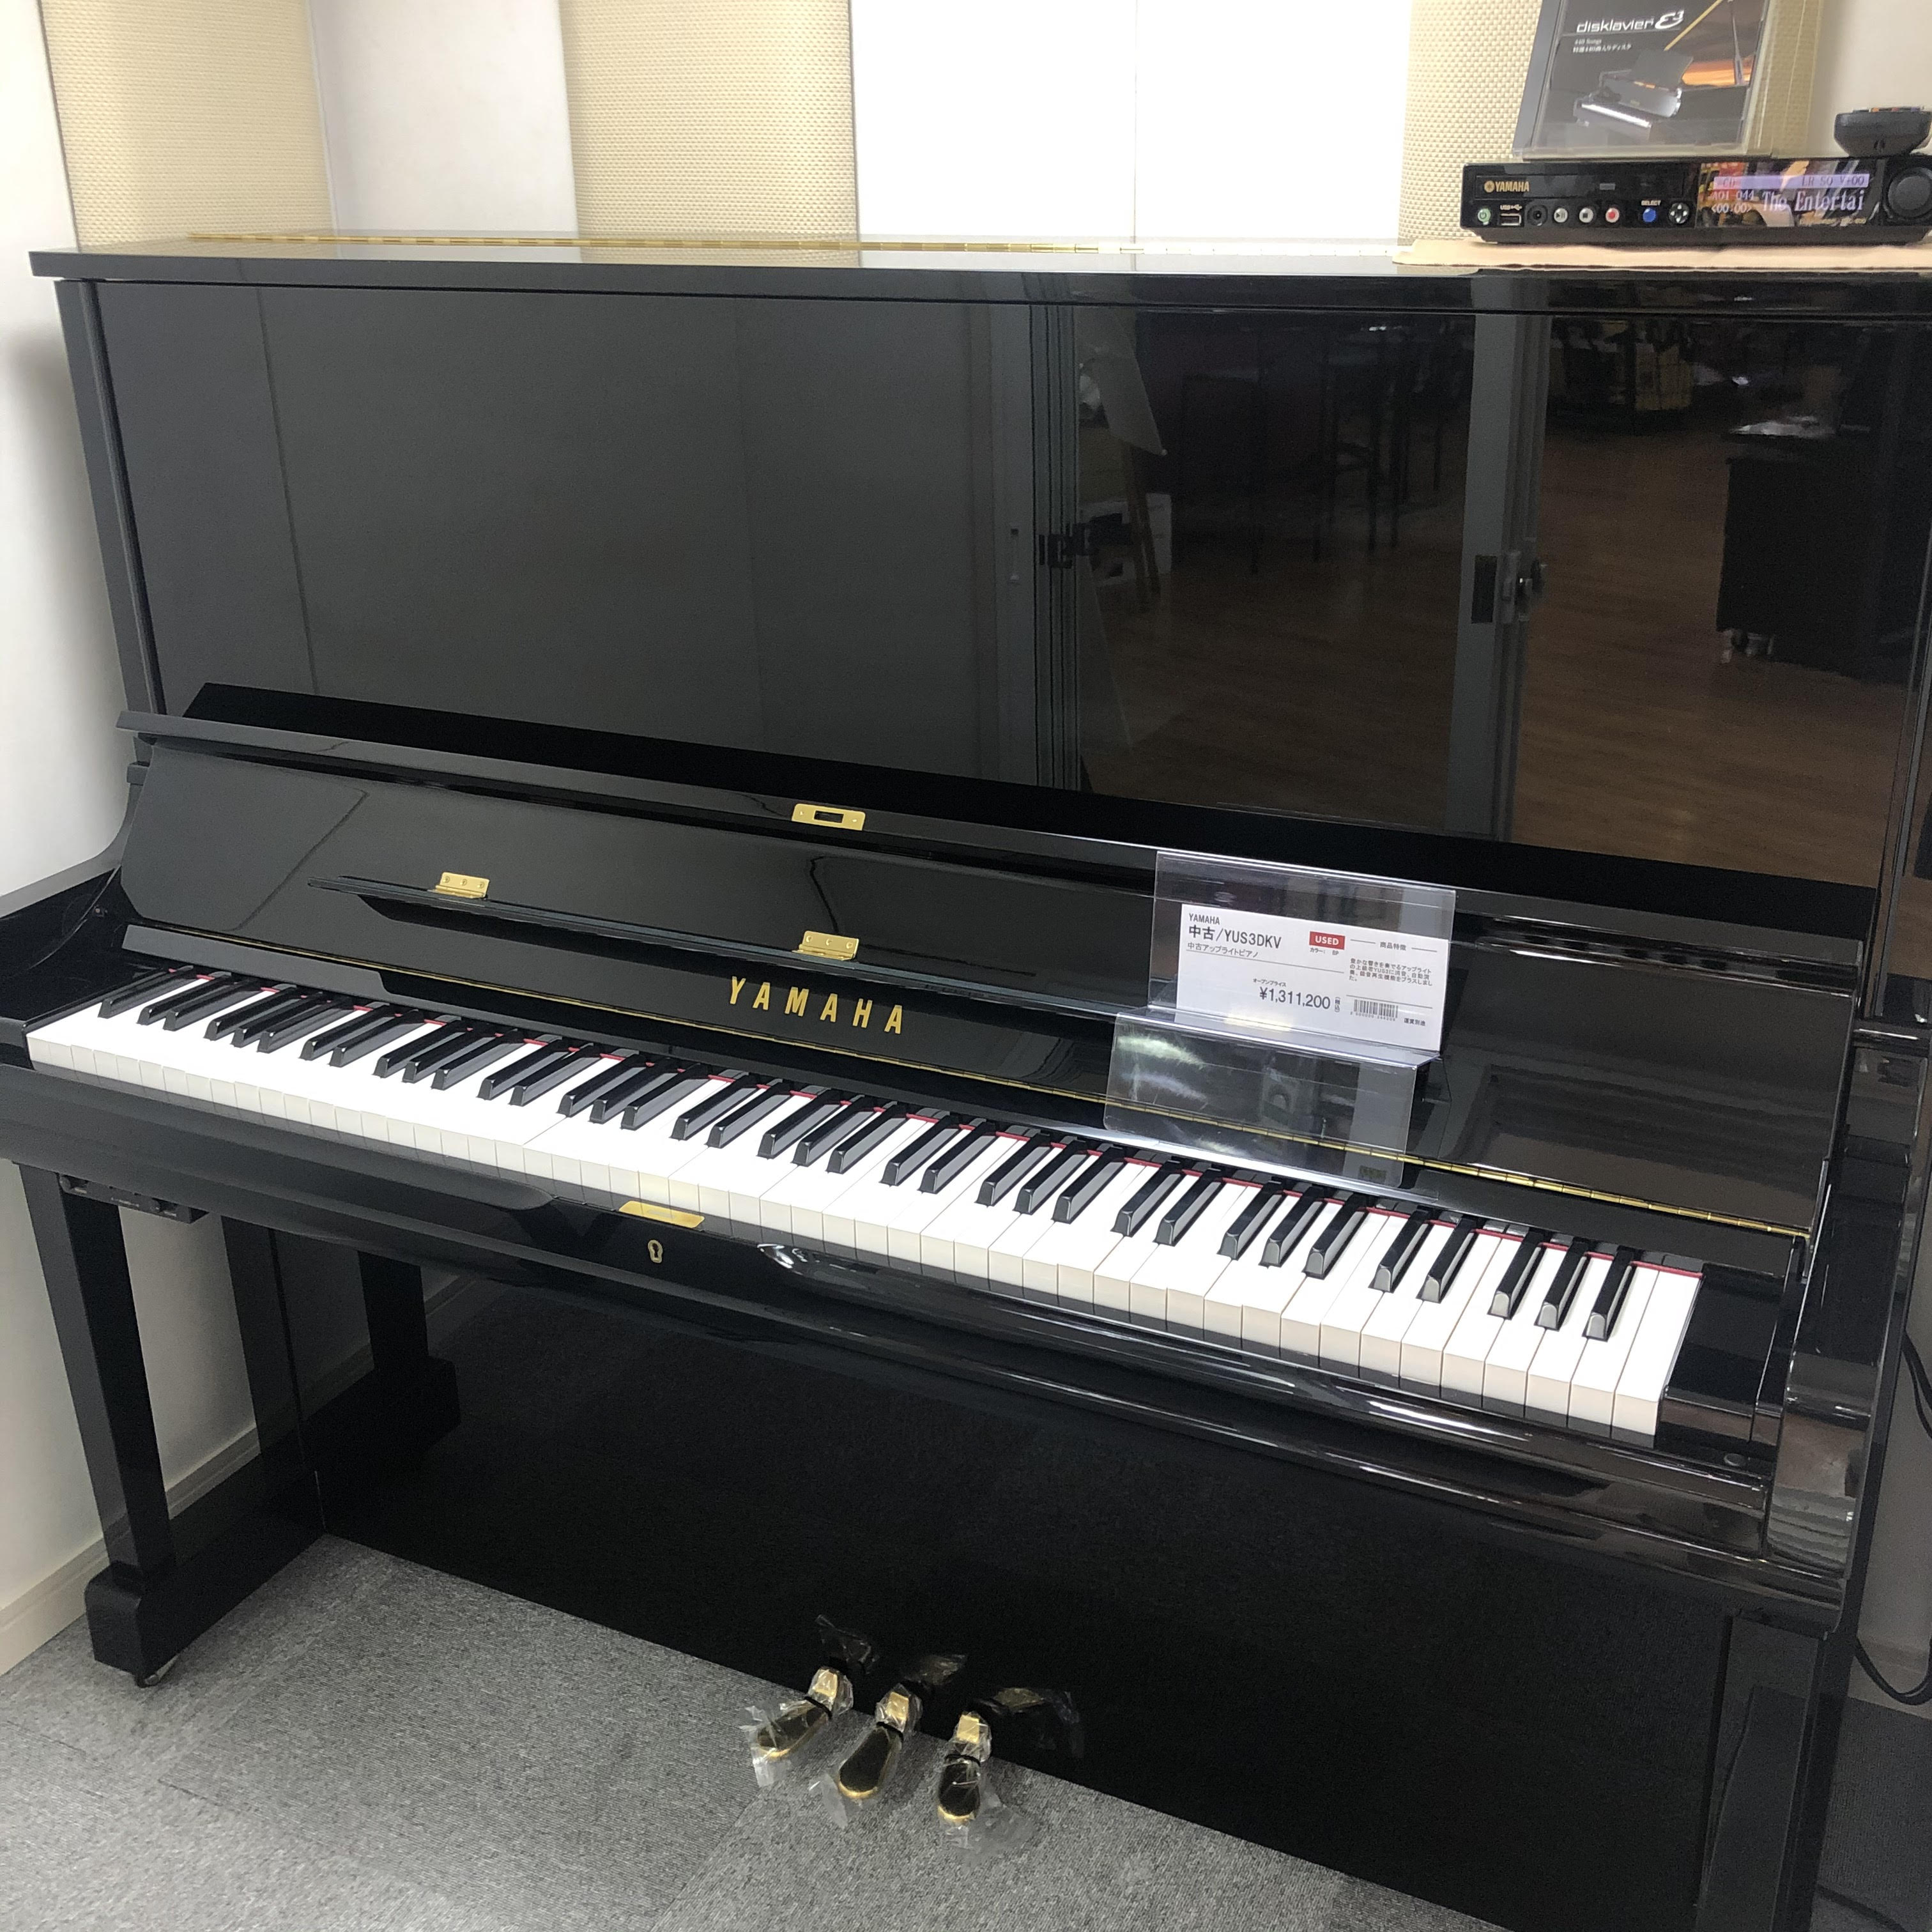 *KAWAI（カワイ）の防音室 ナサール カスタムタイプ（2.0畳・Dr-35・二重の引違サッシ付）にアップライトピアノを設置しました 八王子店に展示中の2.0畳サイズの防音室にアップライトピアノが設置されました。 設置中のアップライトピアノについては[https://www.shimamura.c […]